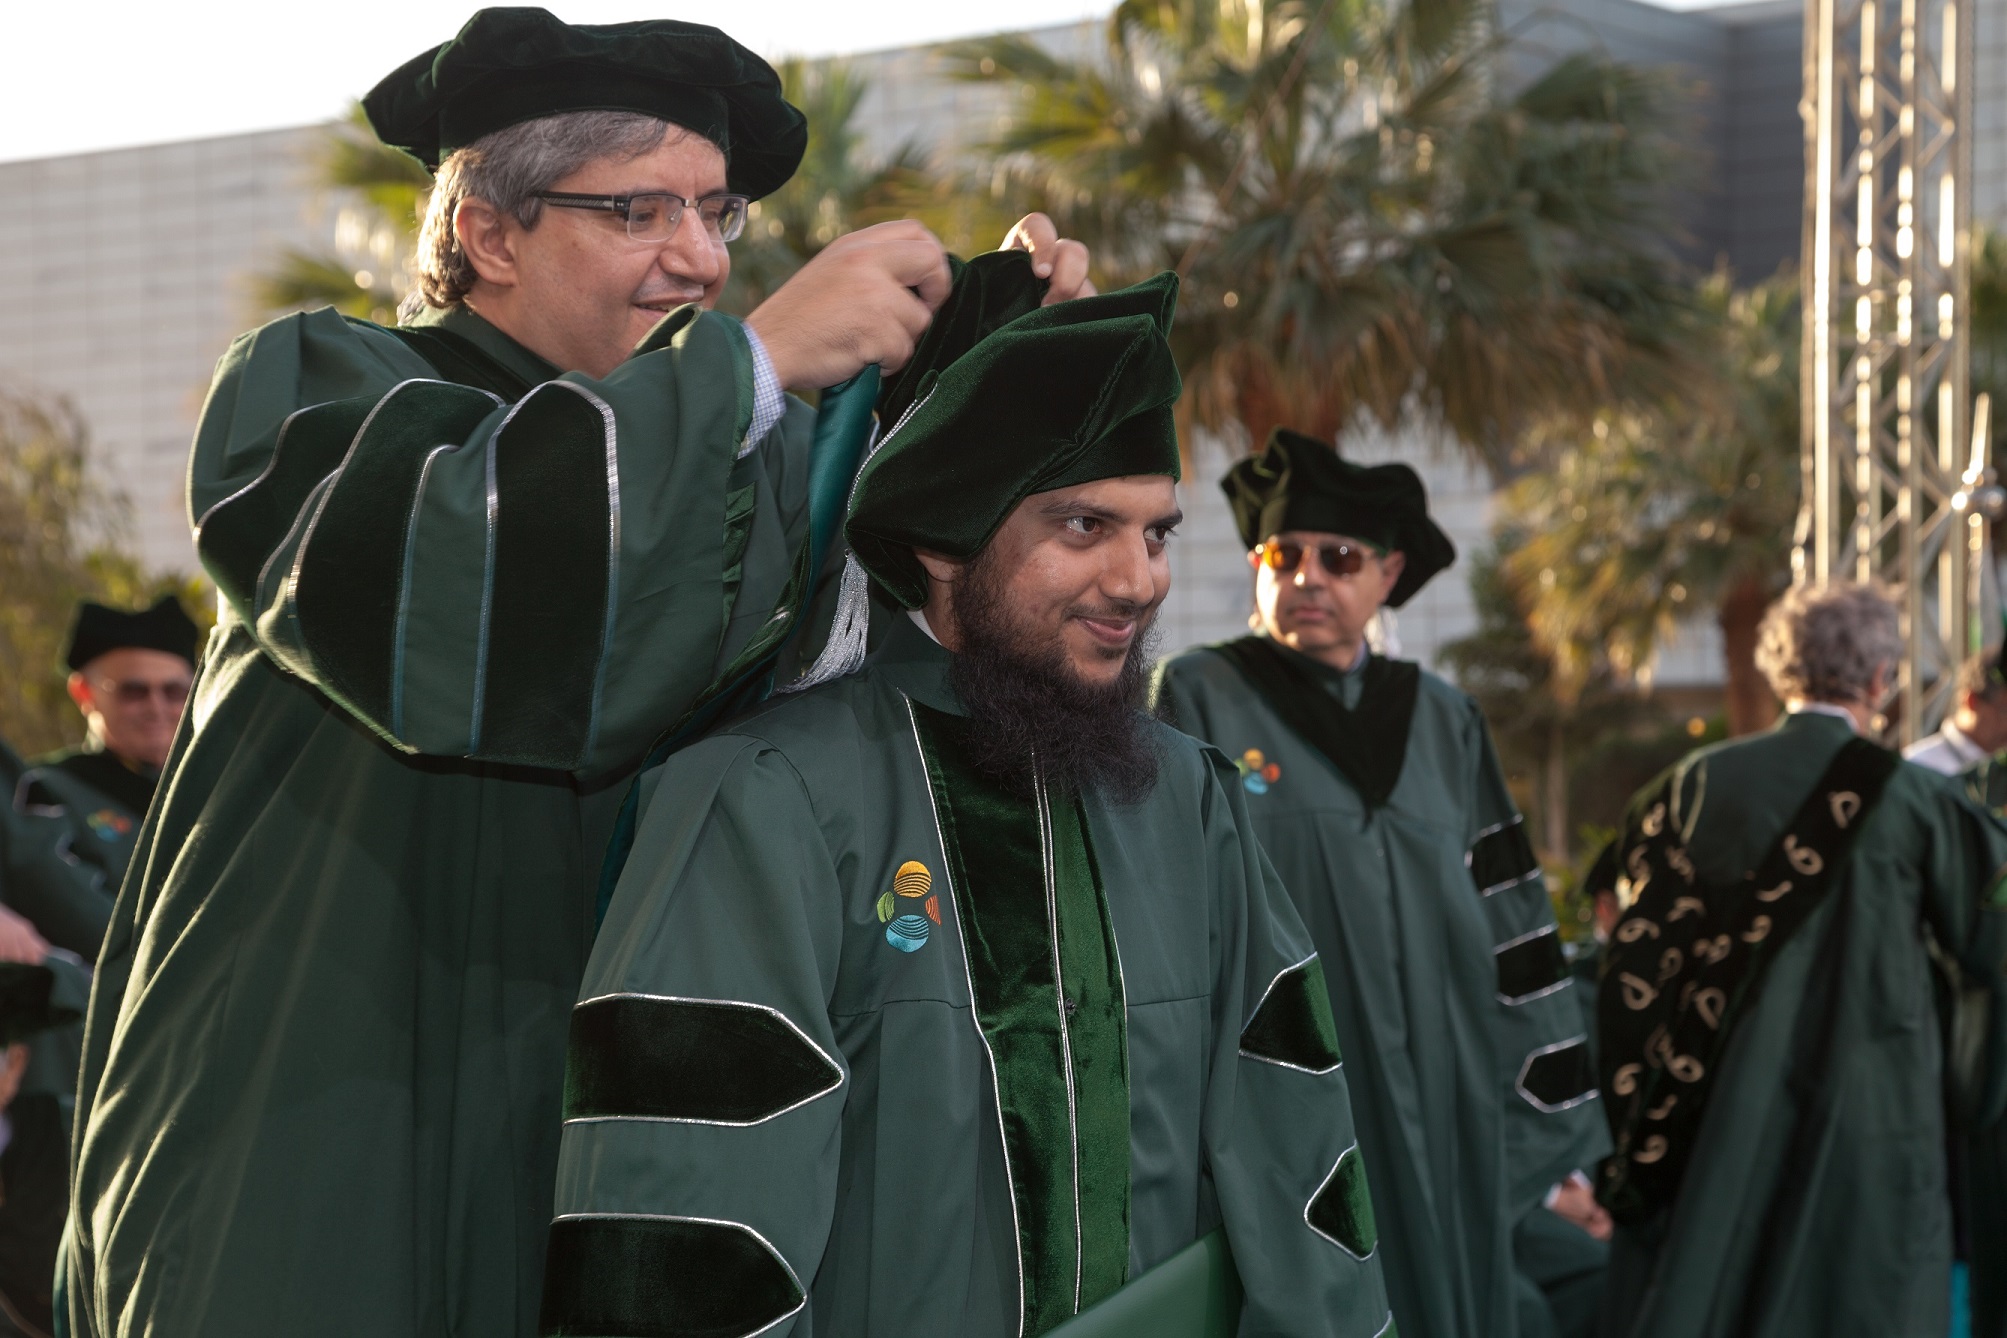  Professor Alouini awarding the Doctoral Hood to Fahd Khan during his graduation